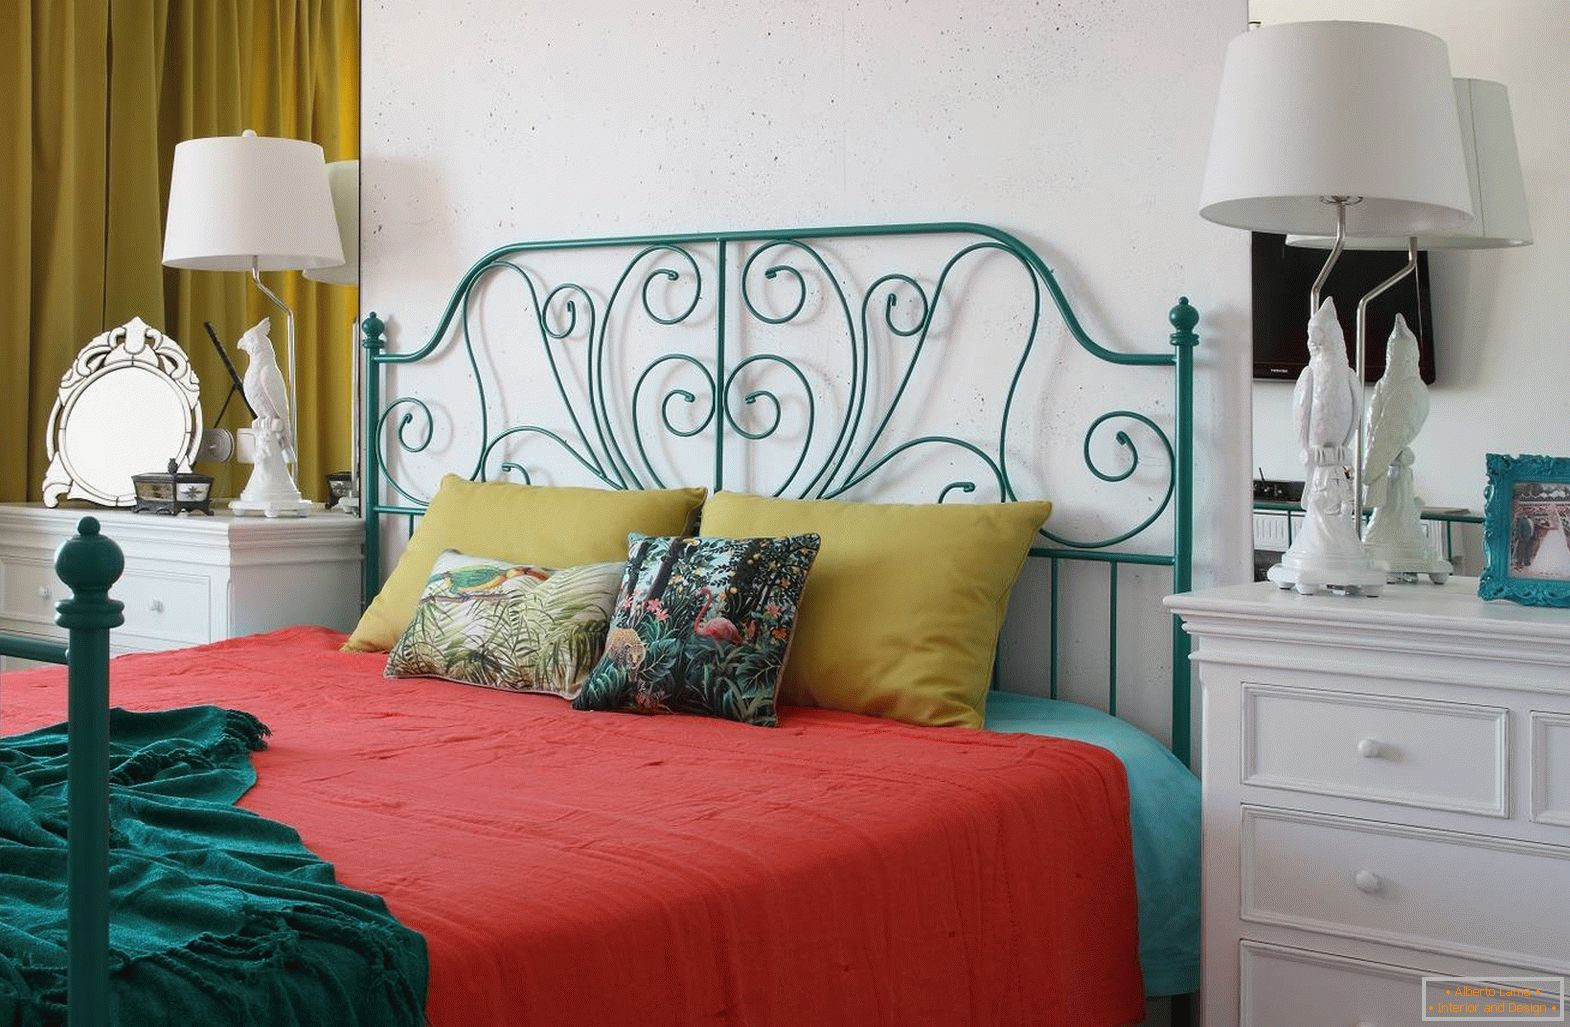 La chambre с кроватью в стиле 60-х